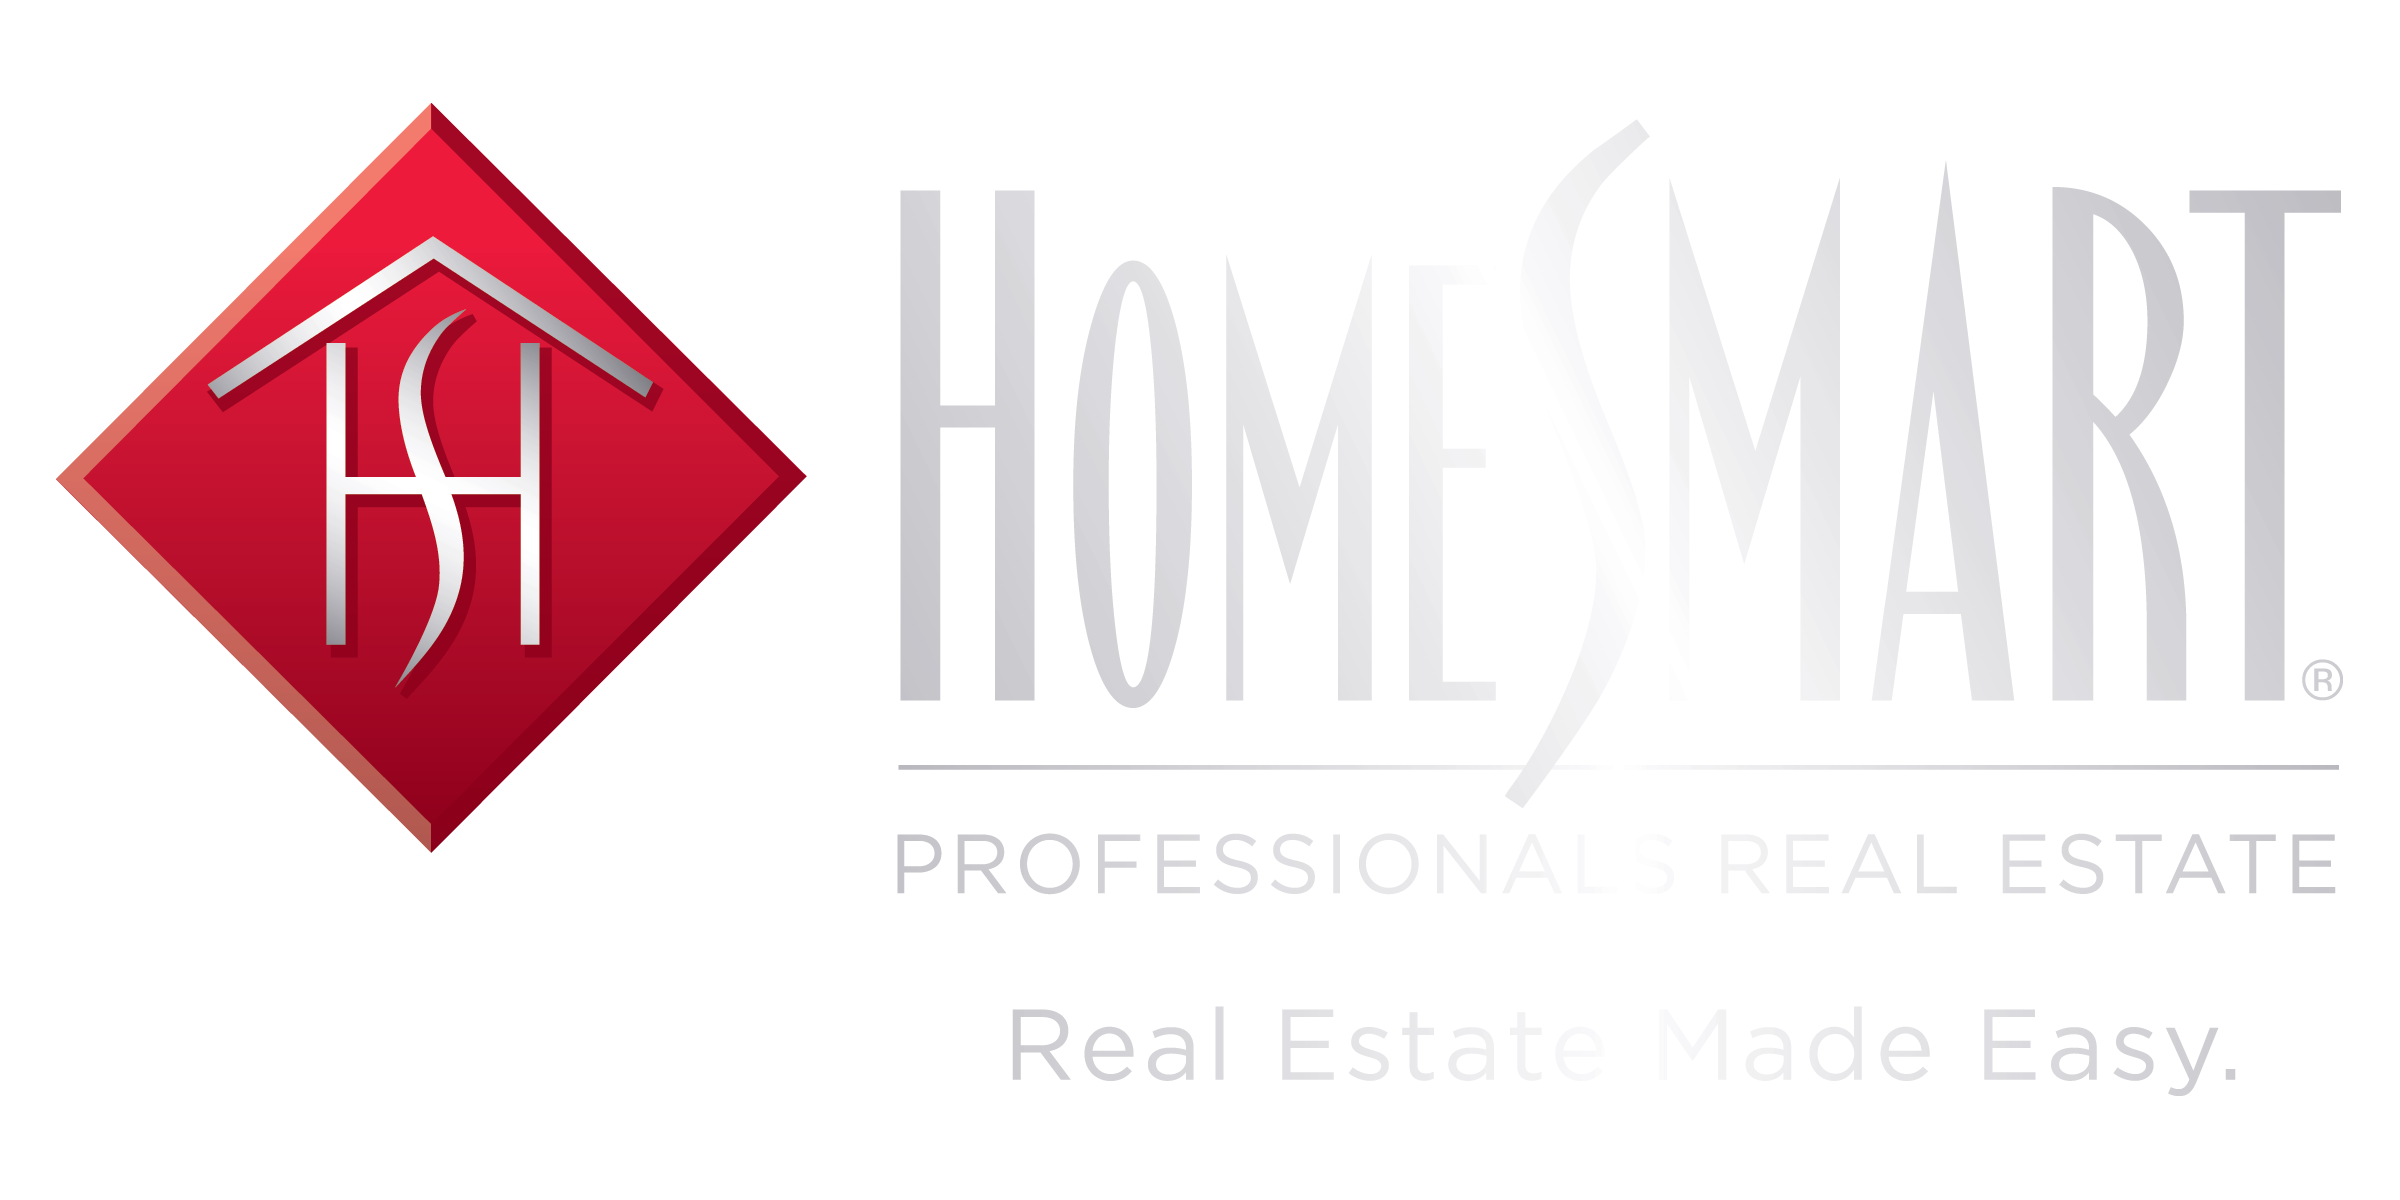 HomeSmart  Professionals Real Estate